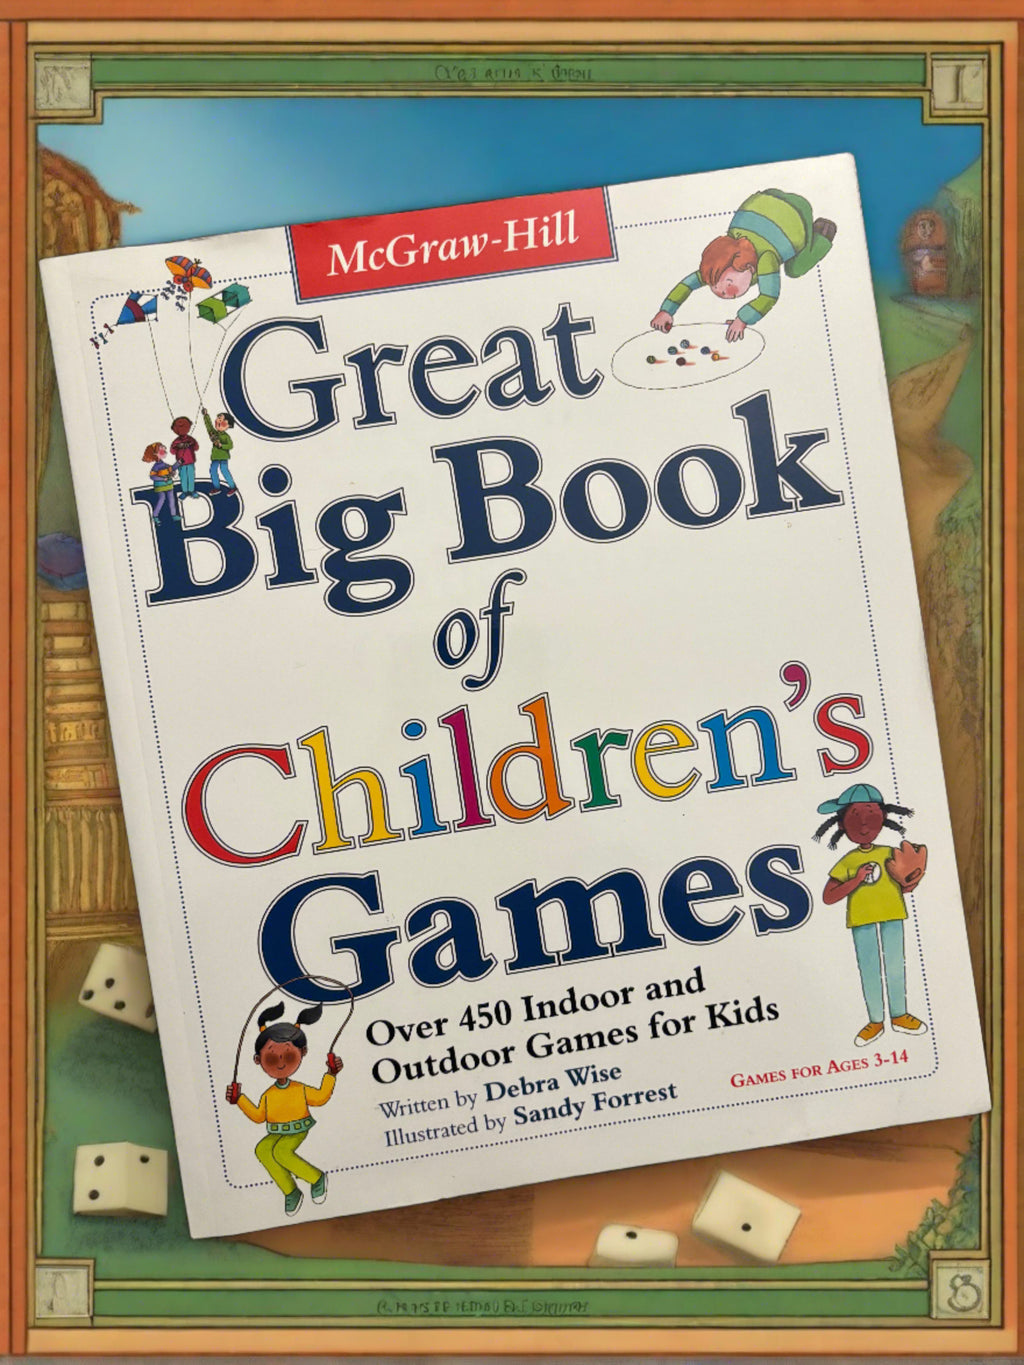 Great Big Book of Children's Games: Over 450 Indoor and (Outdoor Games for Kids- By Debra Wise